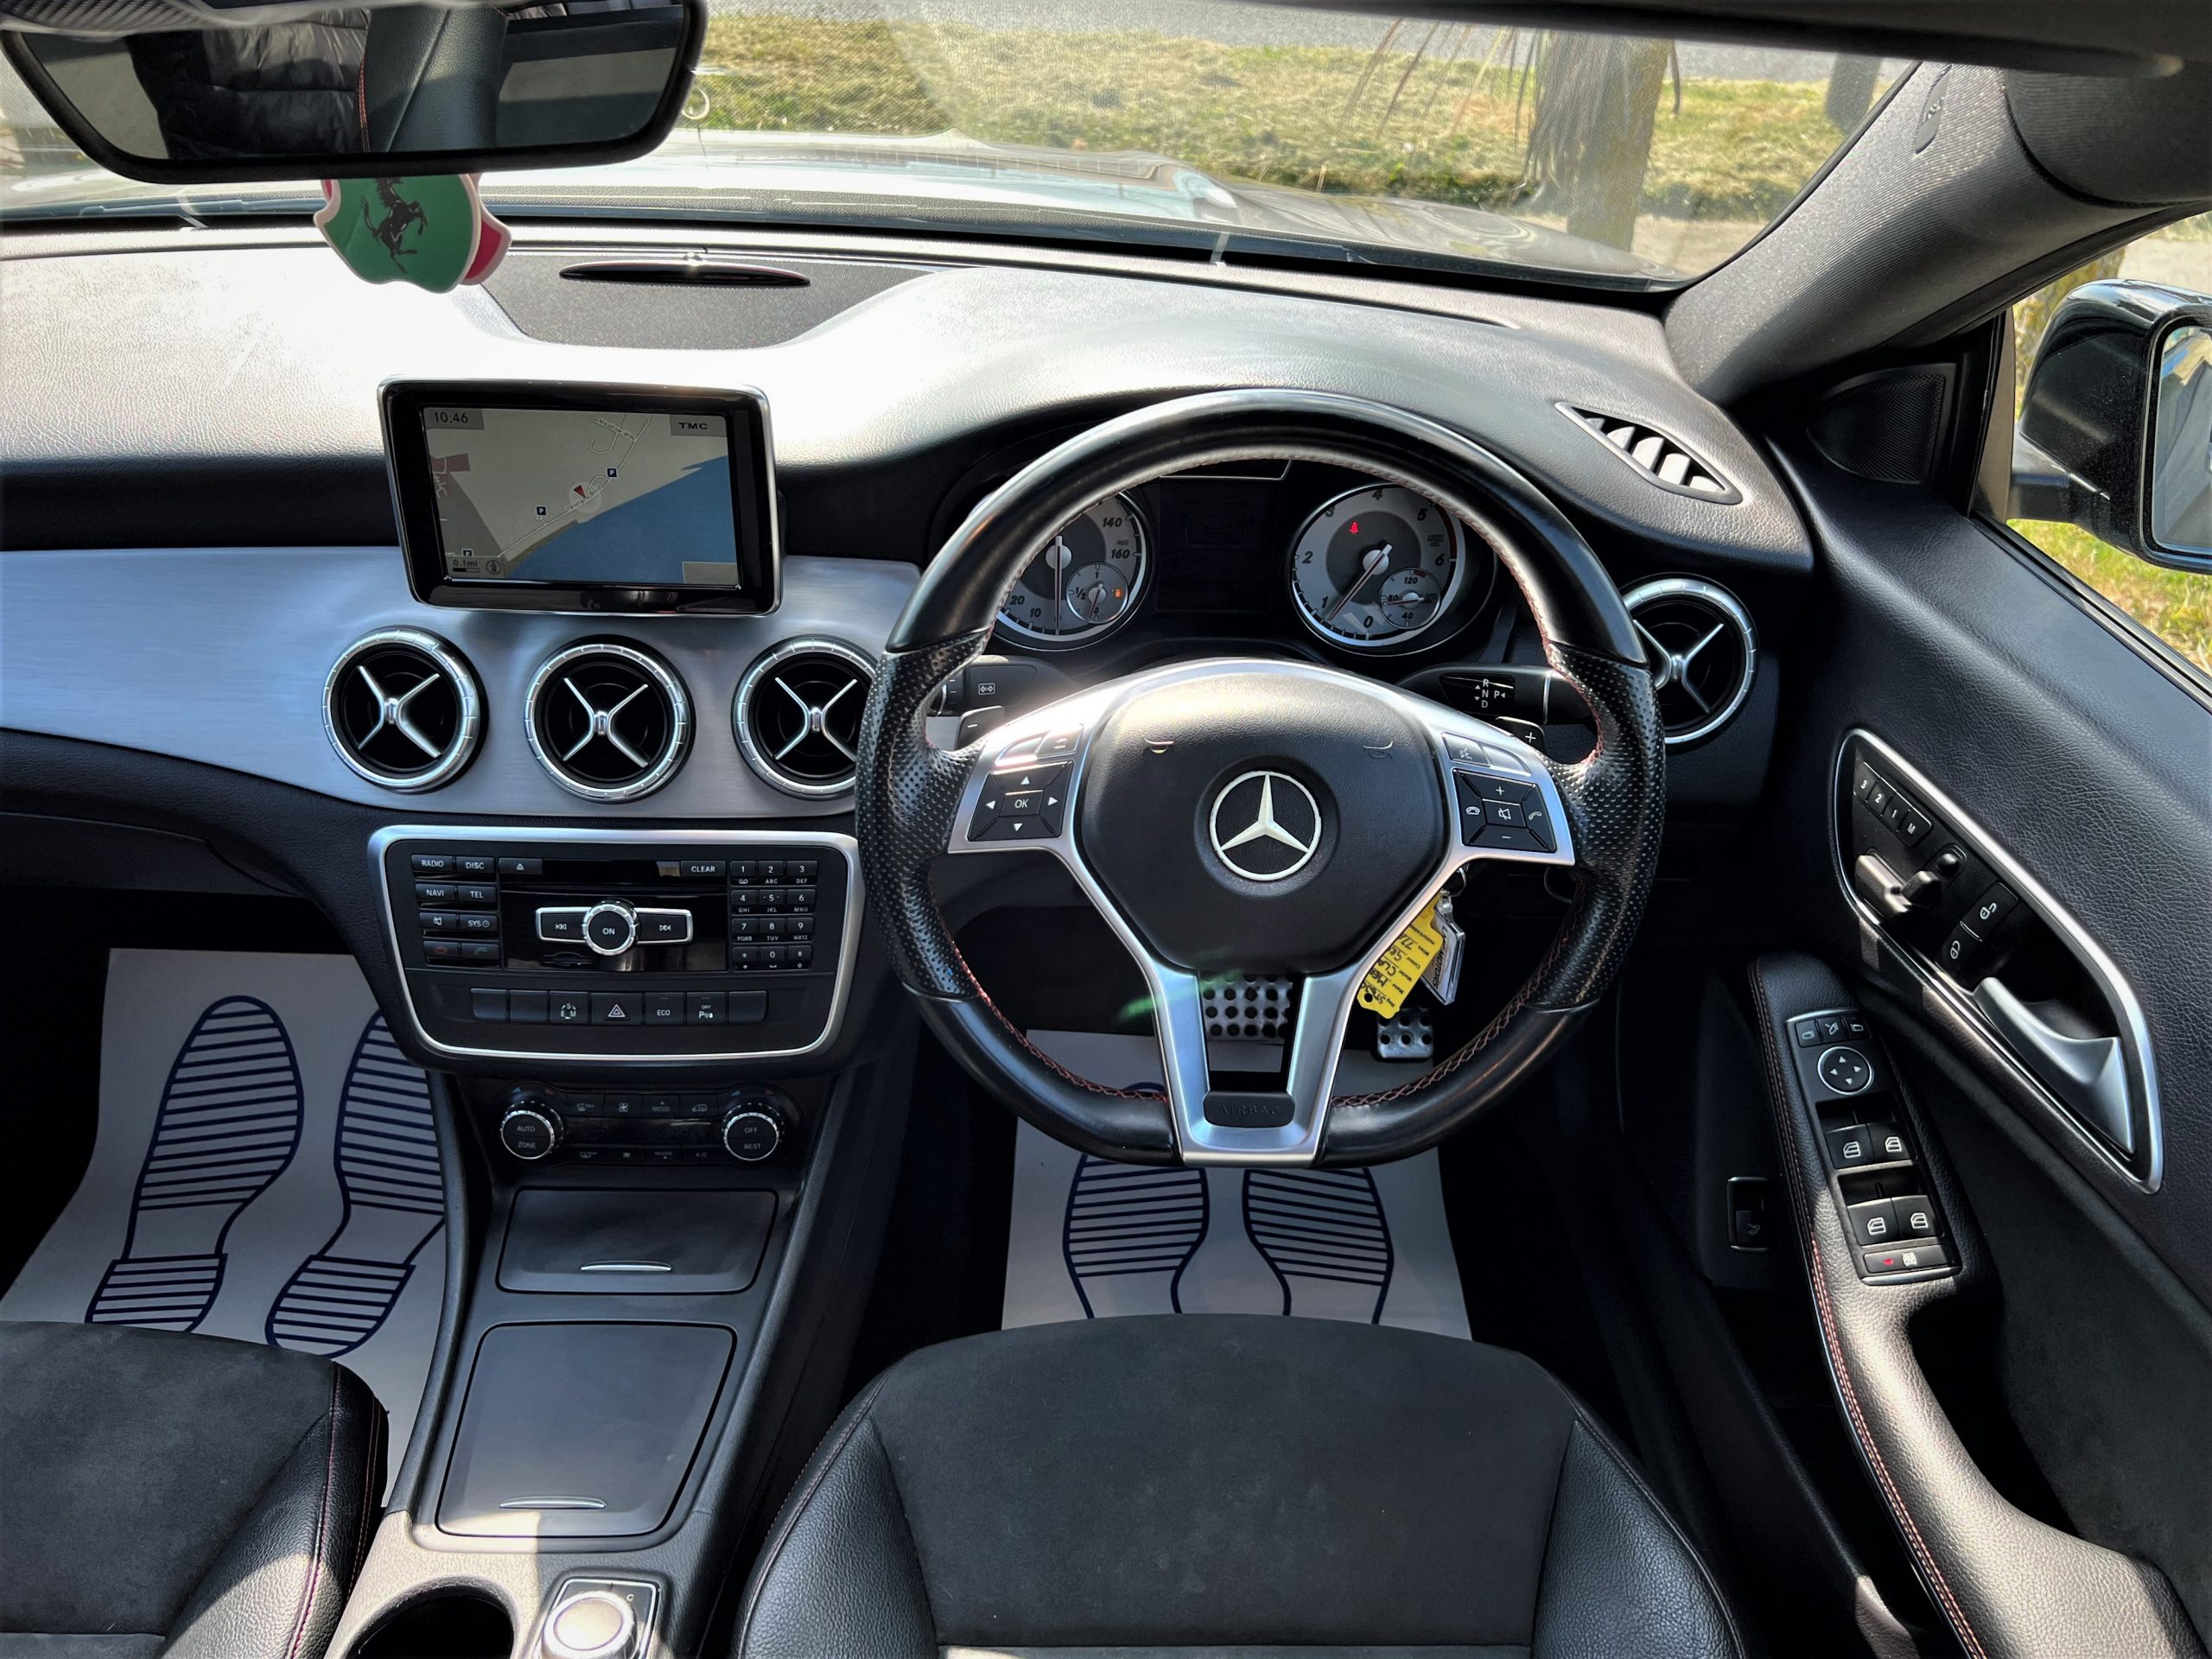 2013 (63) Mercedes-Benz CLA 220 CDI AMG Sport 7G-DCT (Automatic)